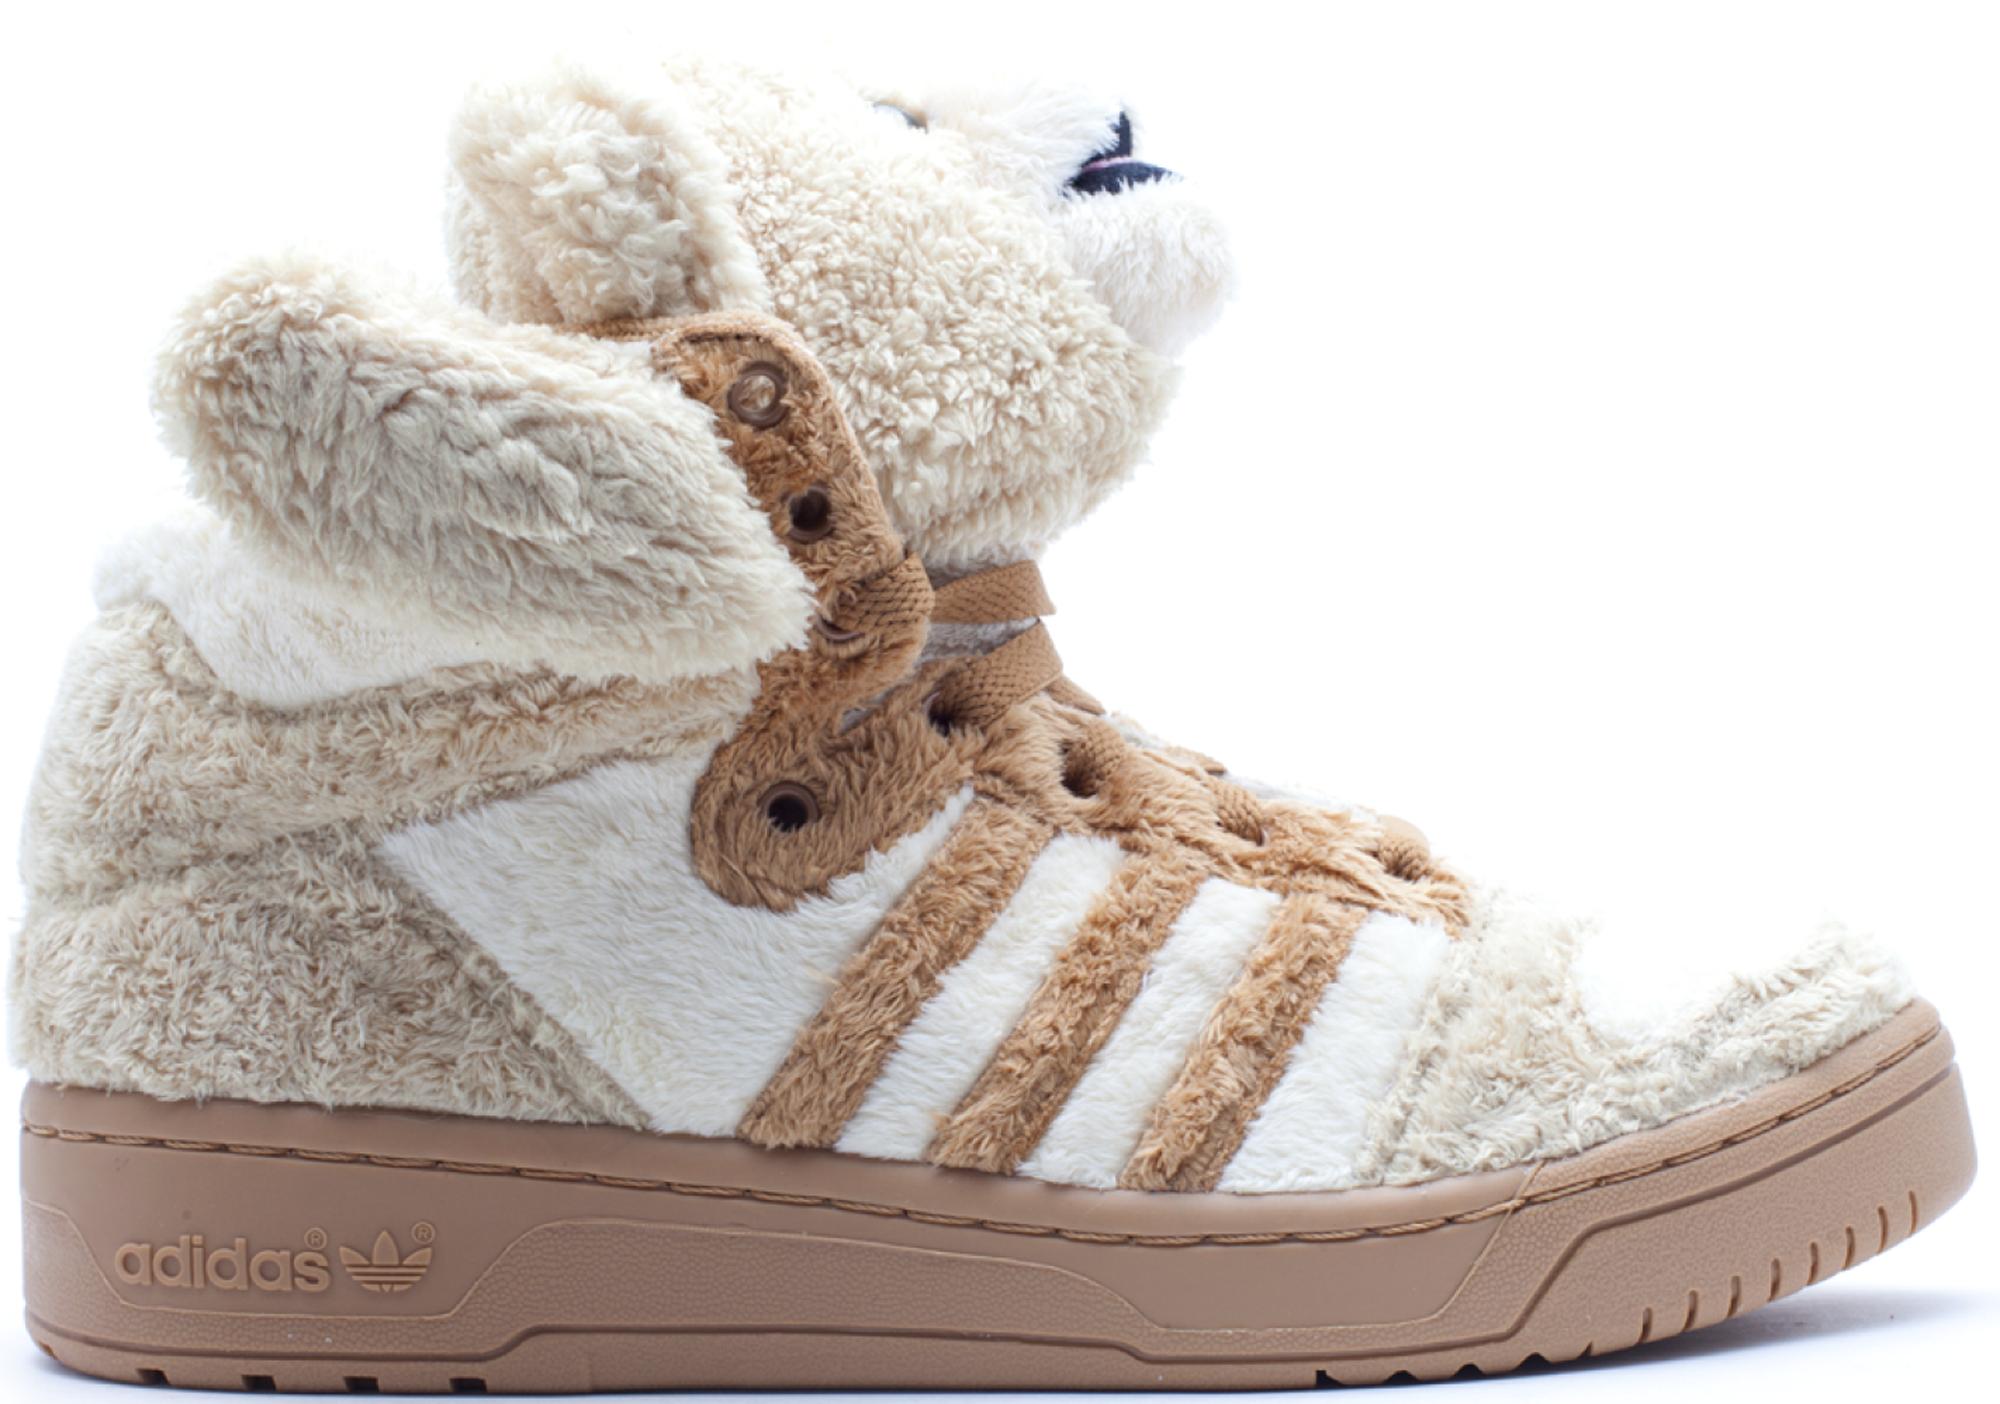 adidas limited edition teddy bear shoes